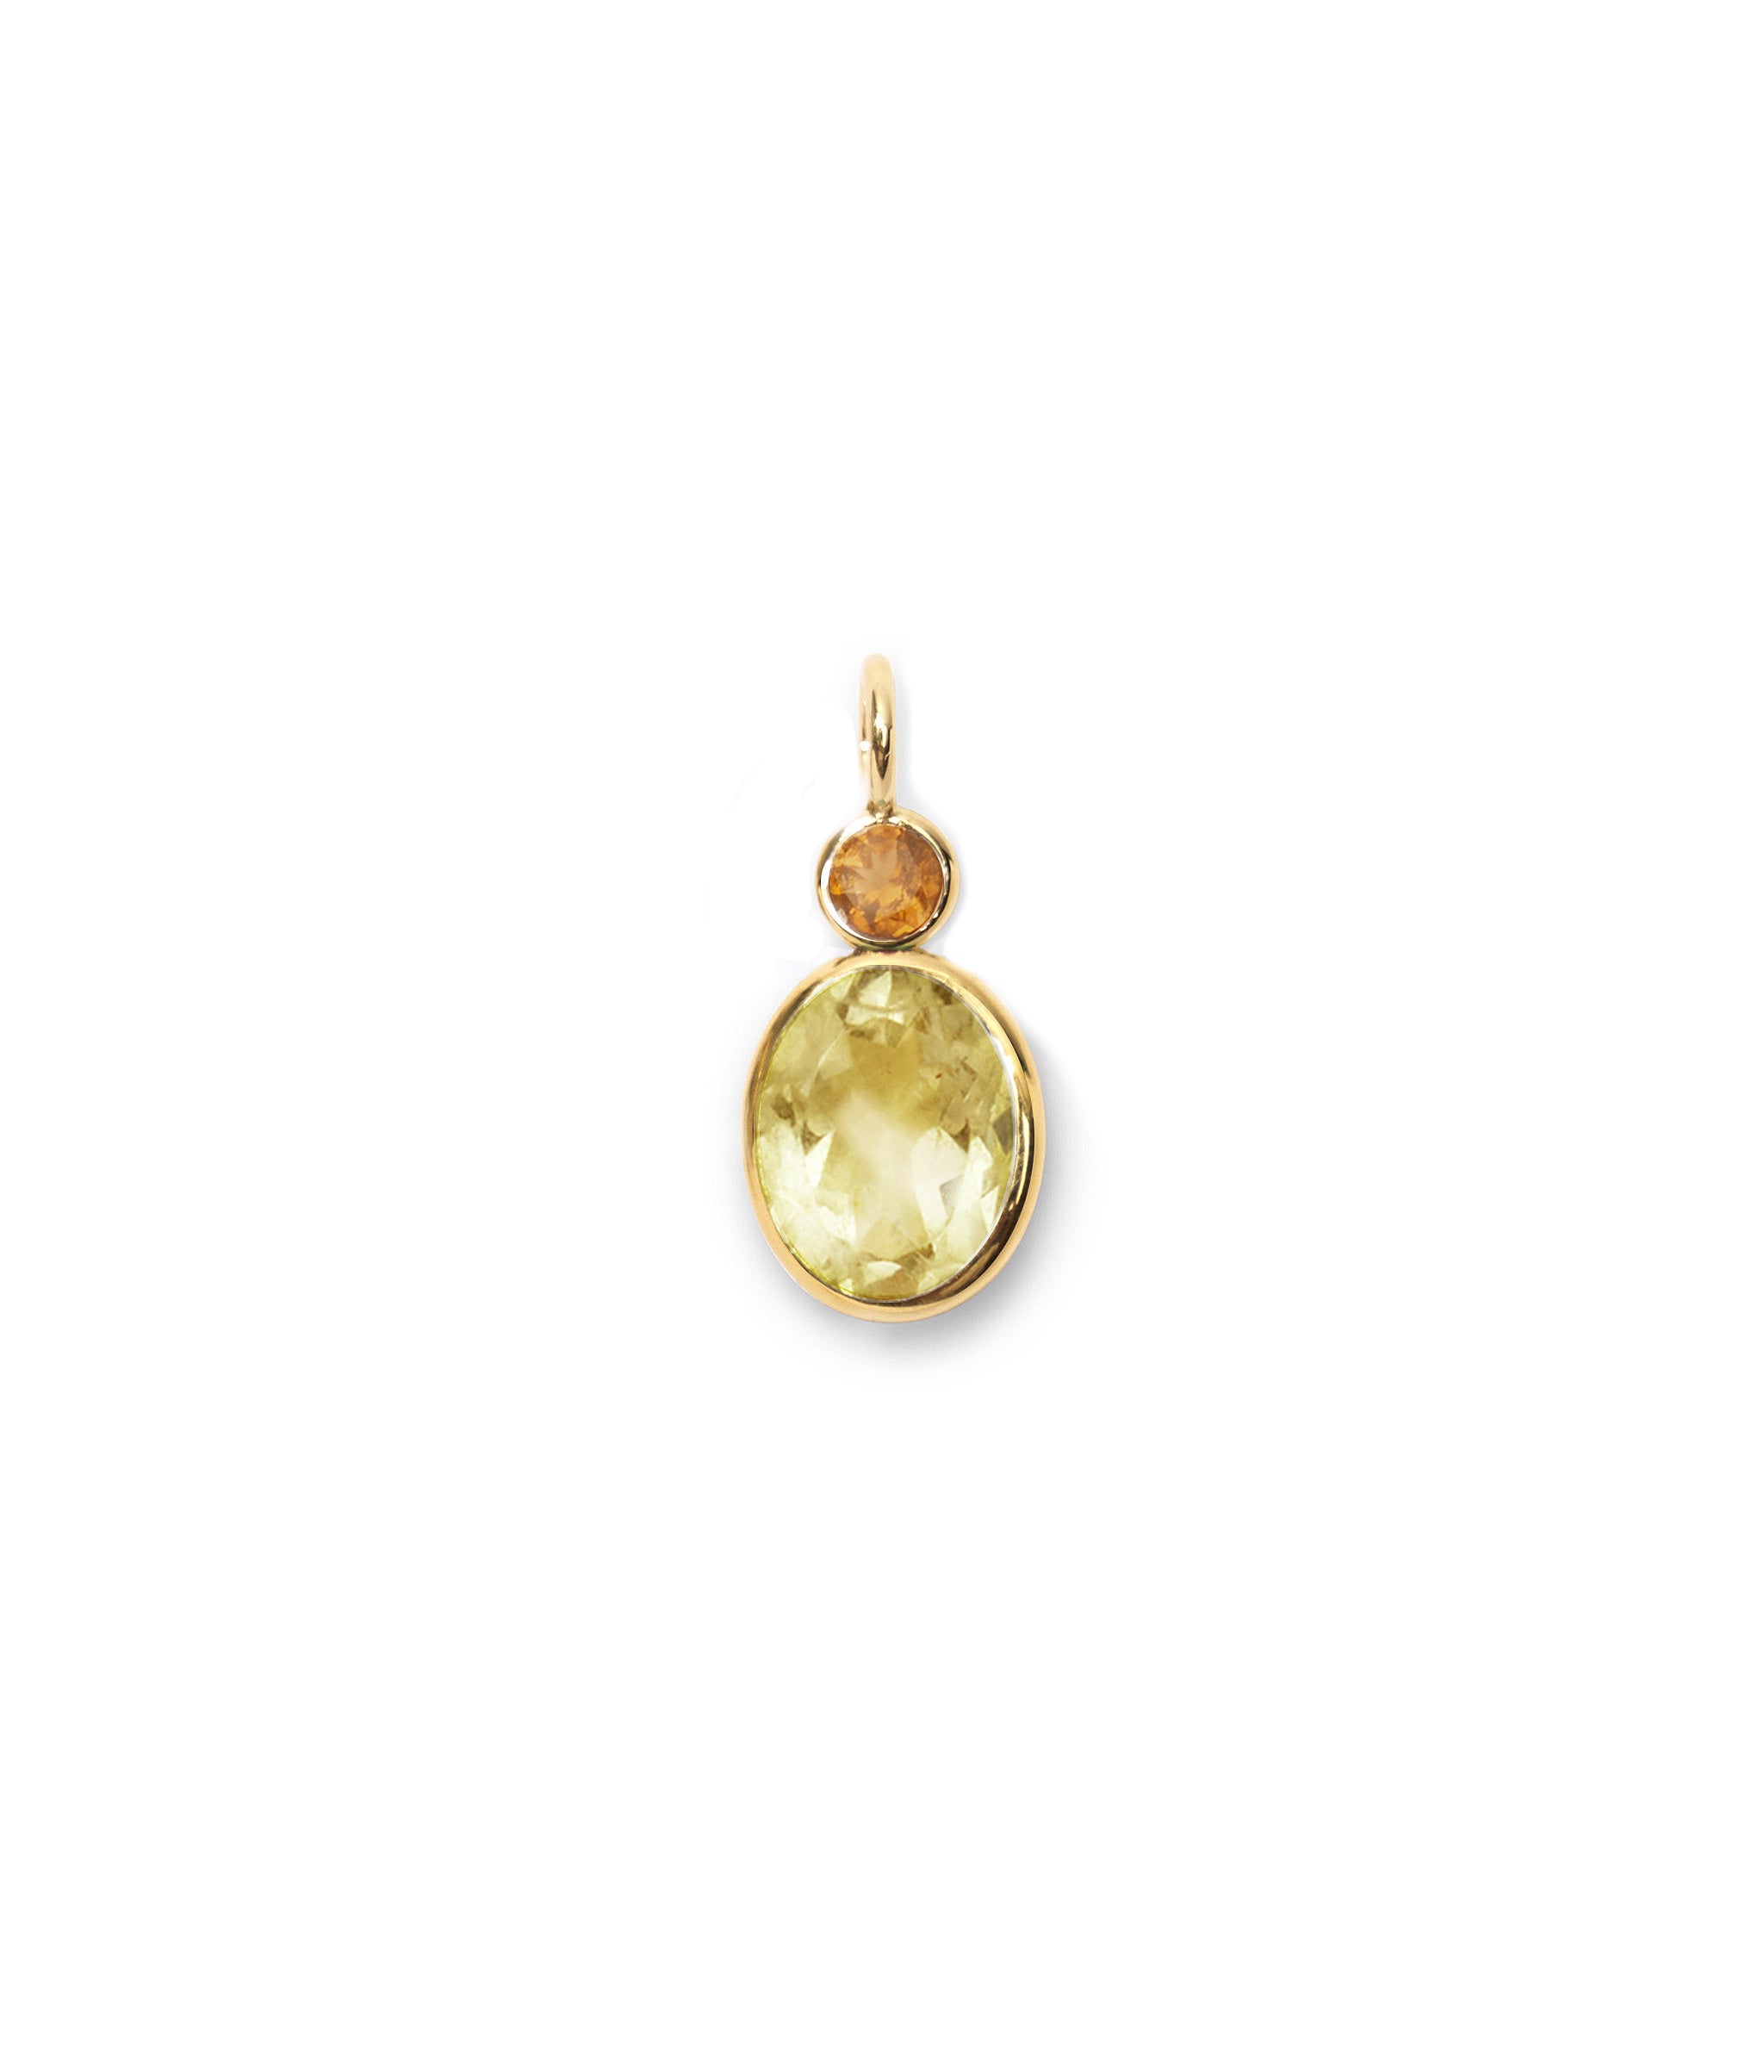 Oval 14k Gold Necklace Charm in Citrine & Lemon Quartz. 14k gold charm with Citrine and Lemon quartz ovals.